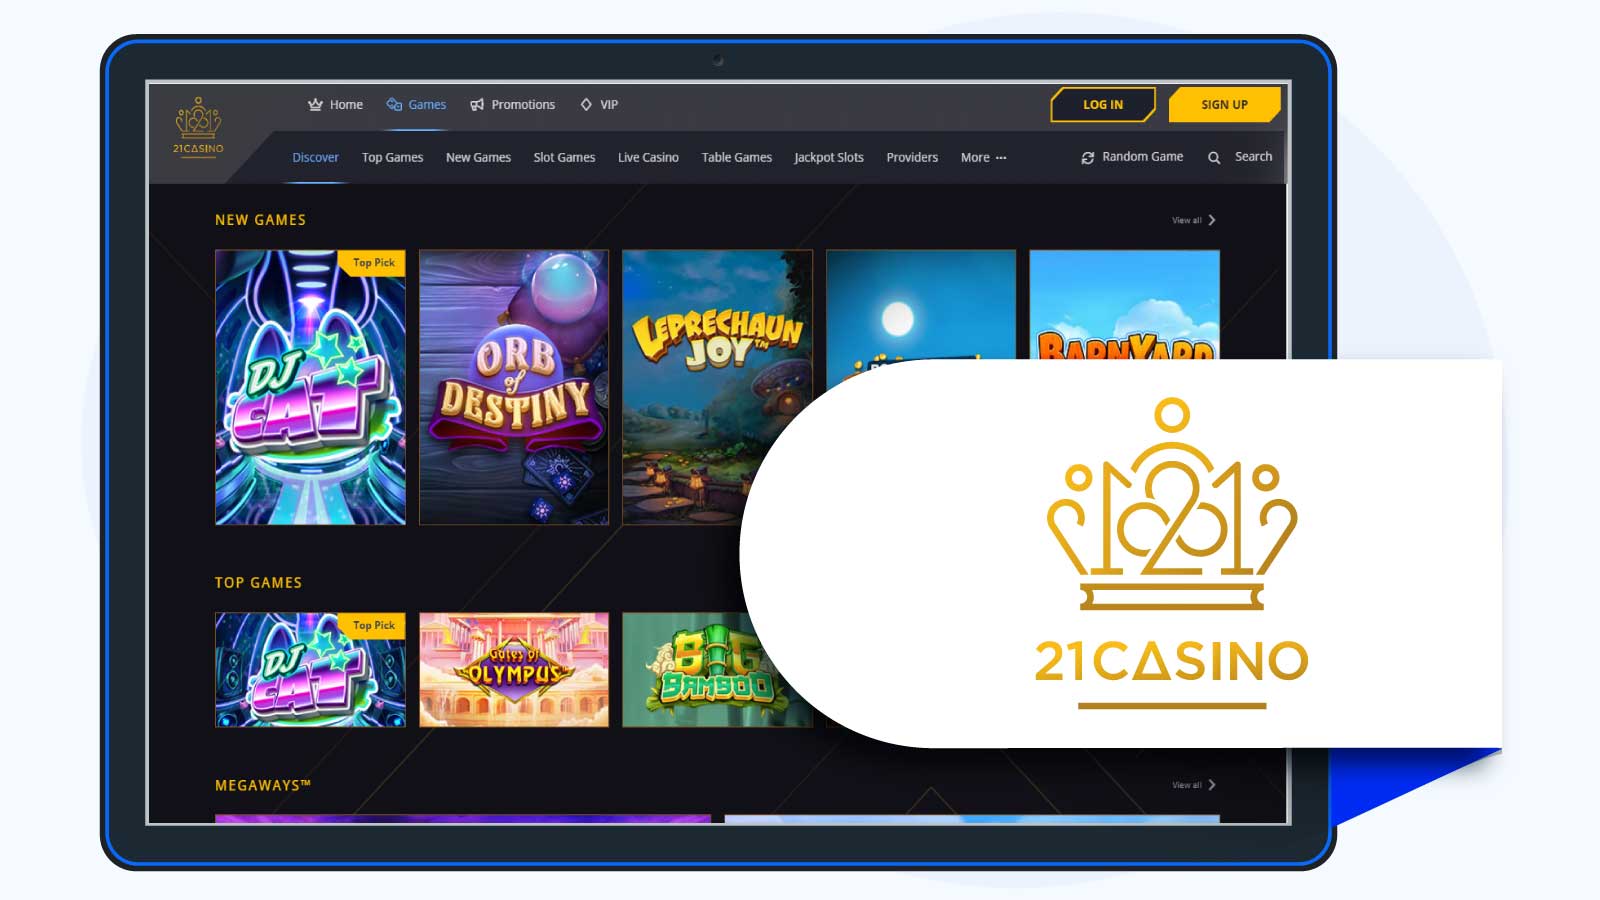 21 Casino Editor’s Choice